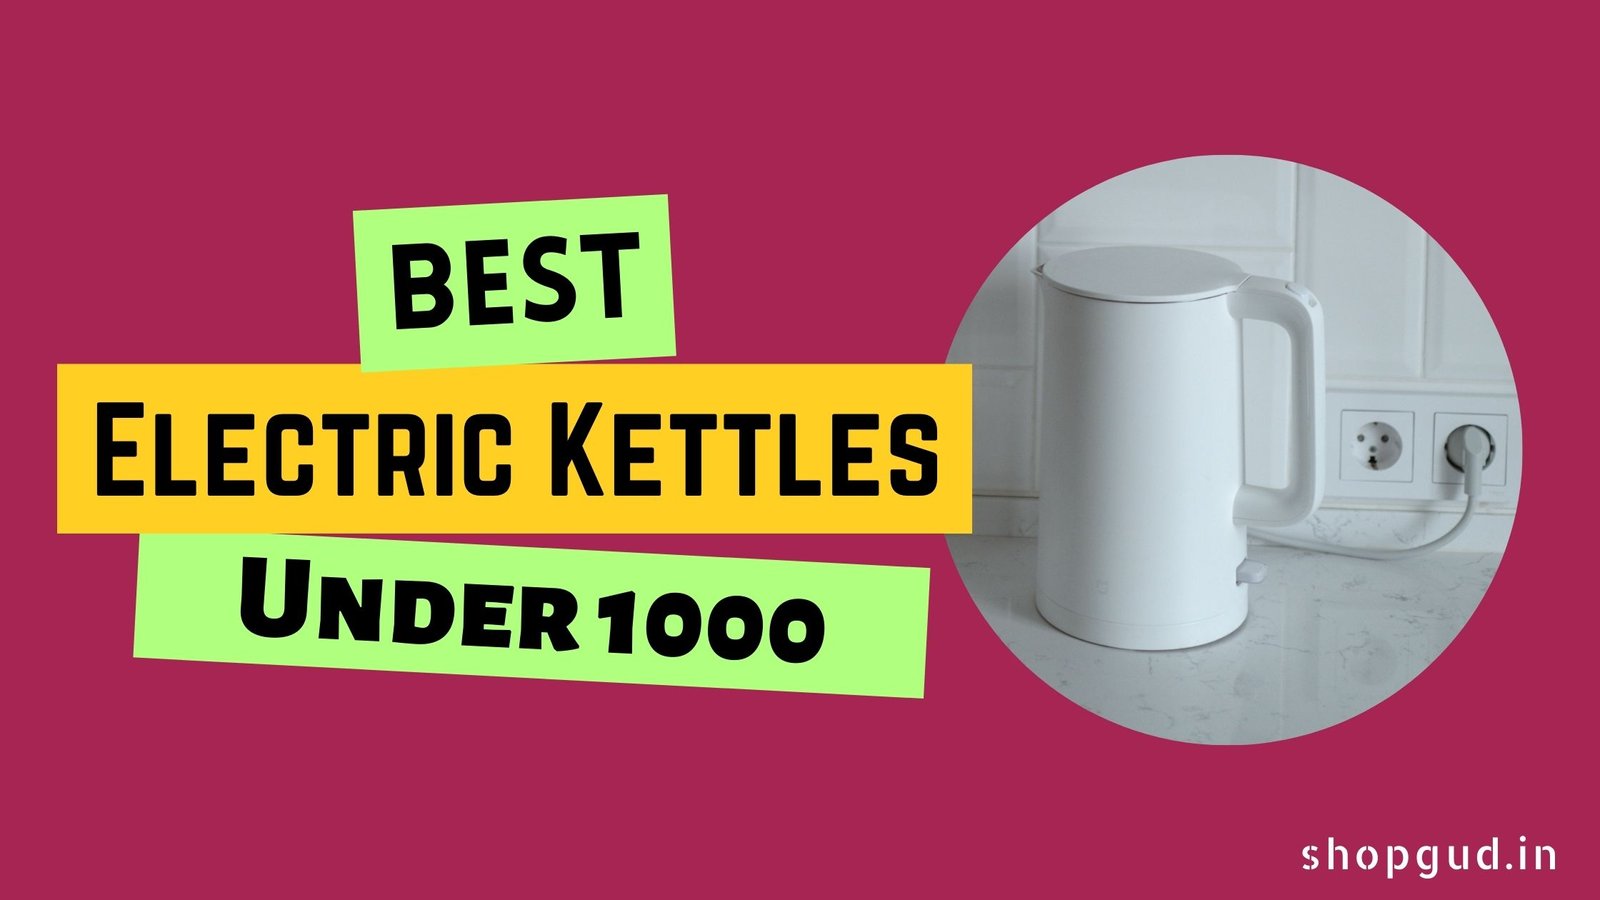 Best Electric Kettles under 1000